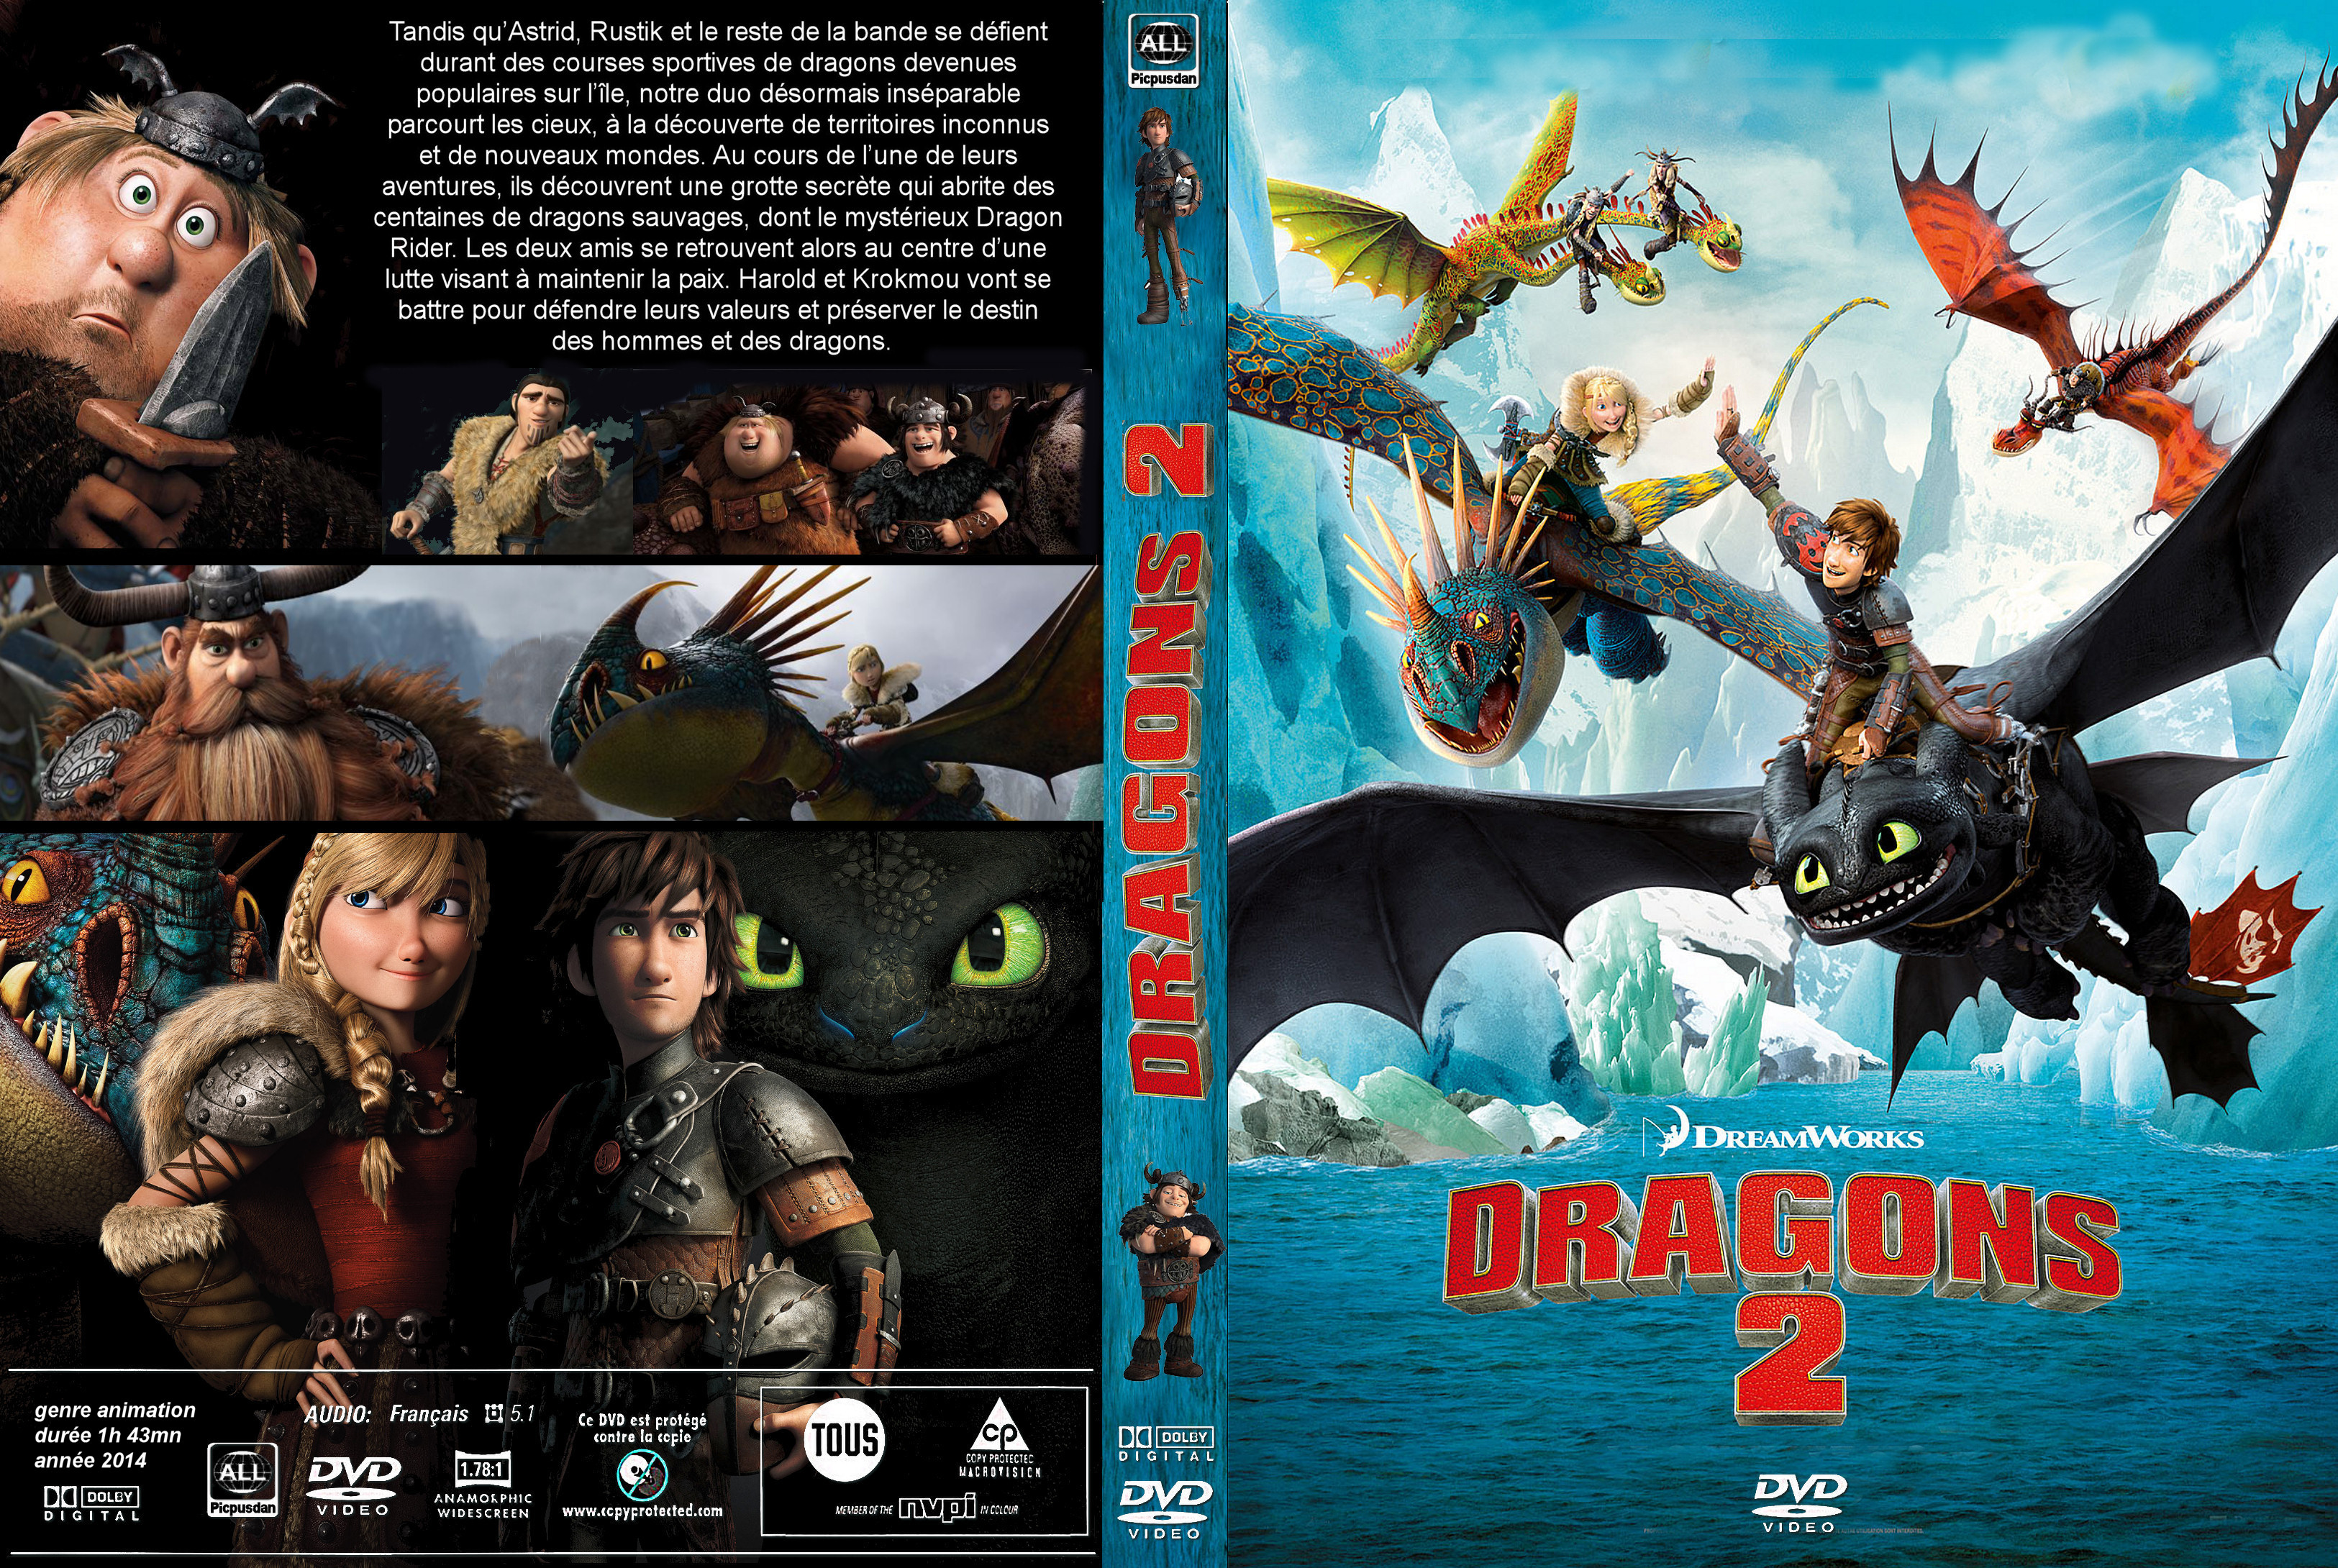 Jaquette DVD Dragons 2 custom